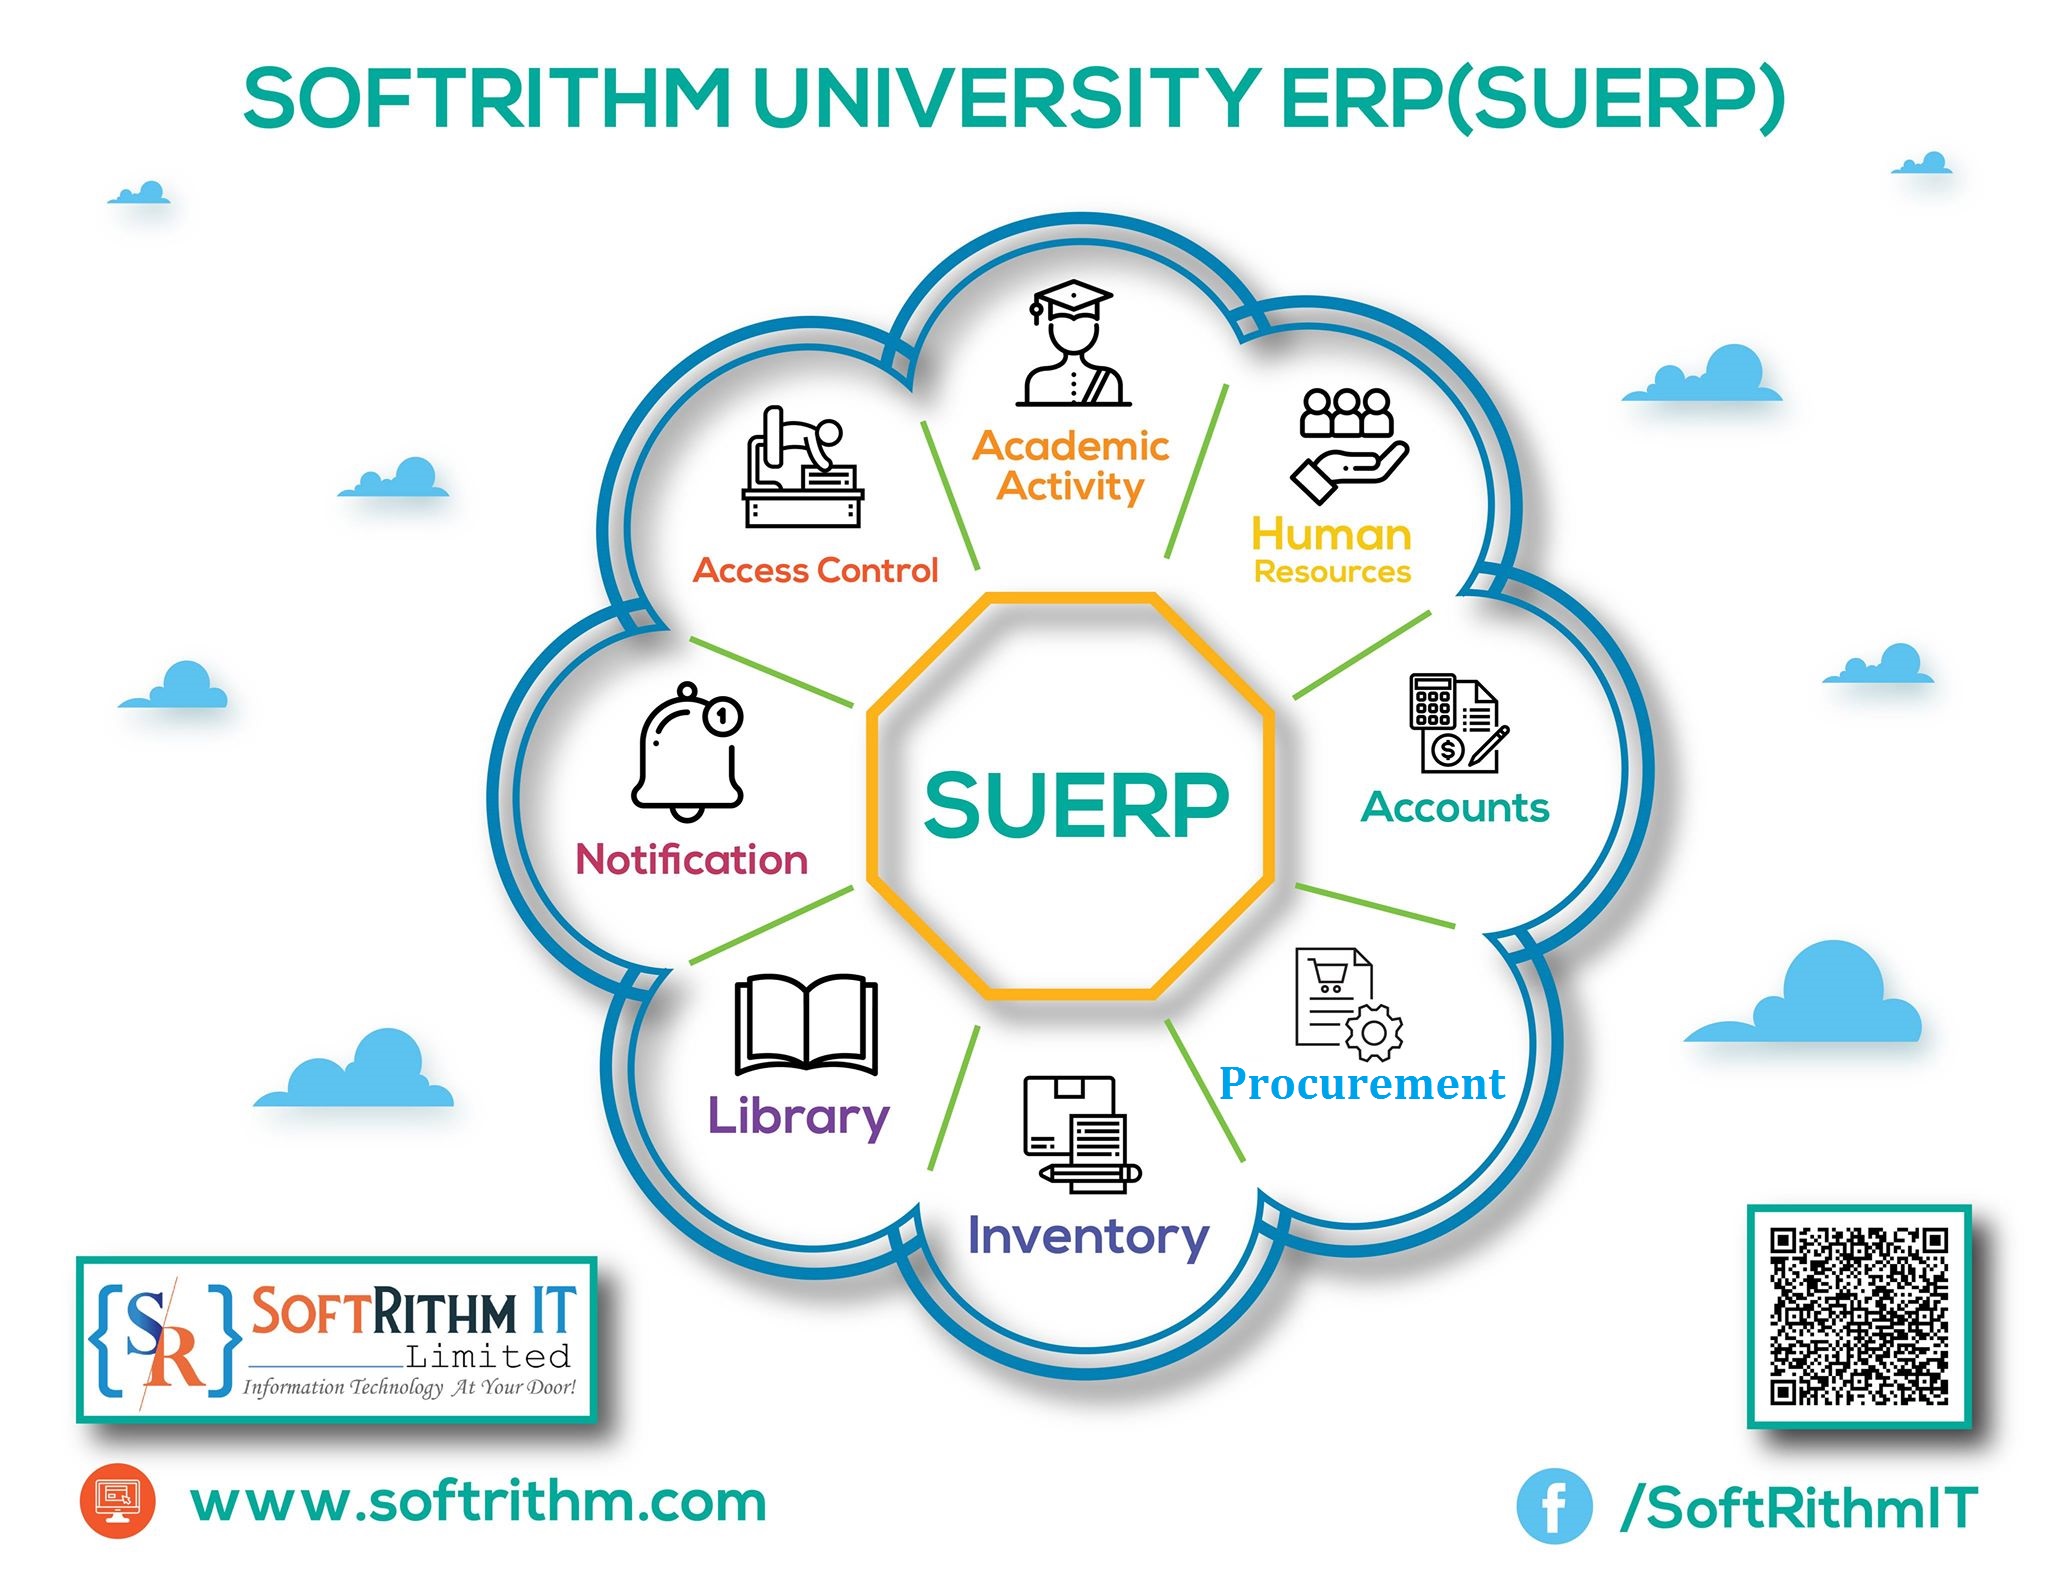 SUERP, SoftRithm University ERP